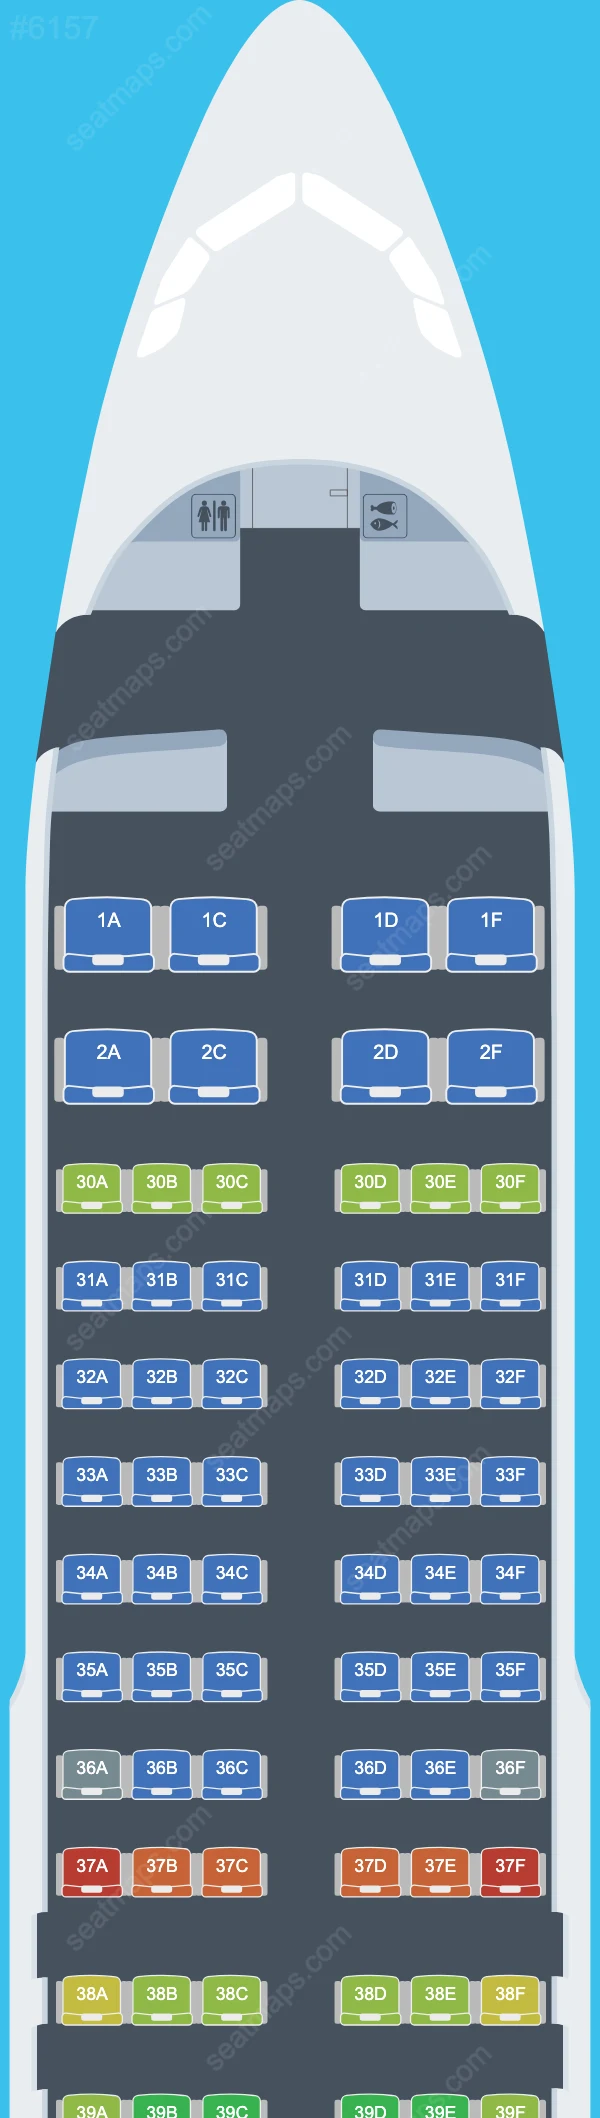 Sichuan Airlines Airbus A320 Plan de Salle A320-200 V.1